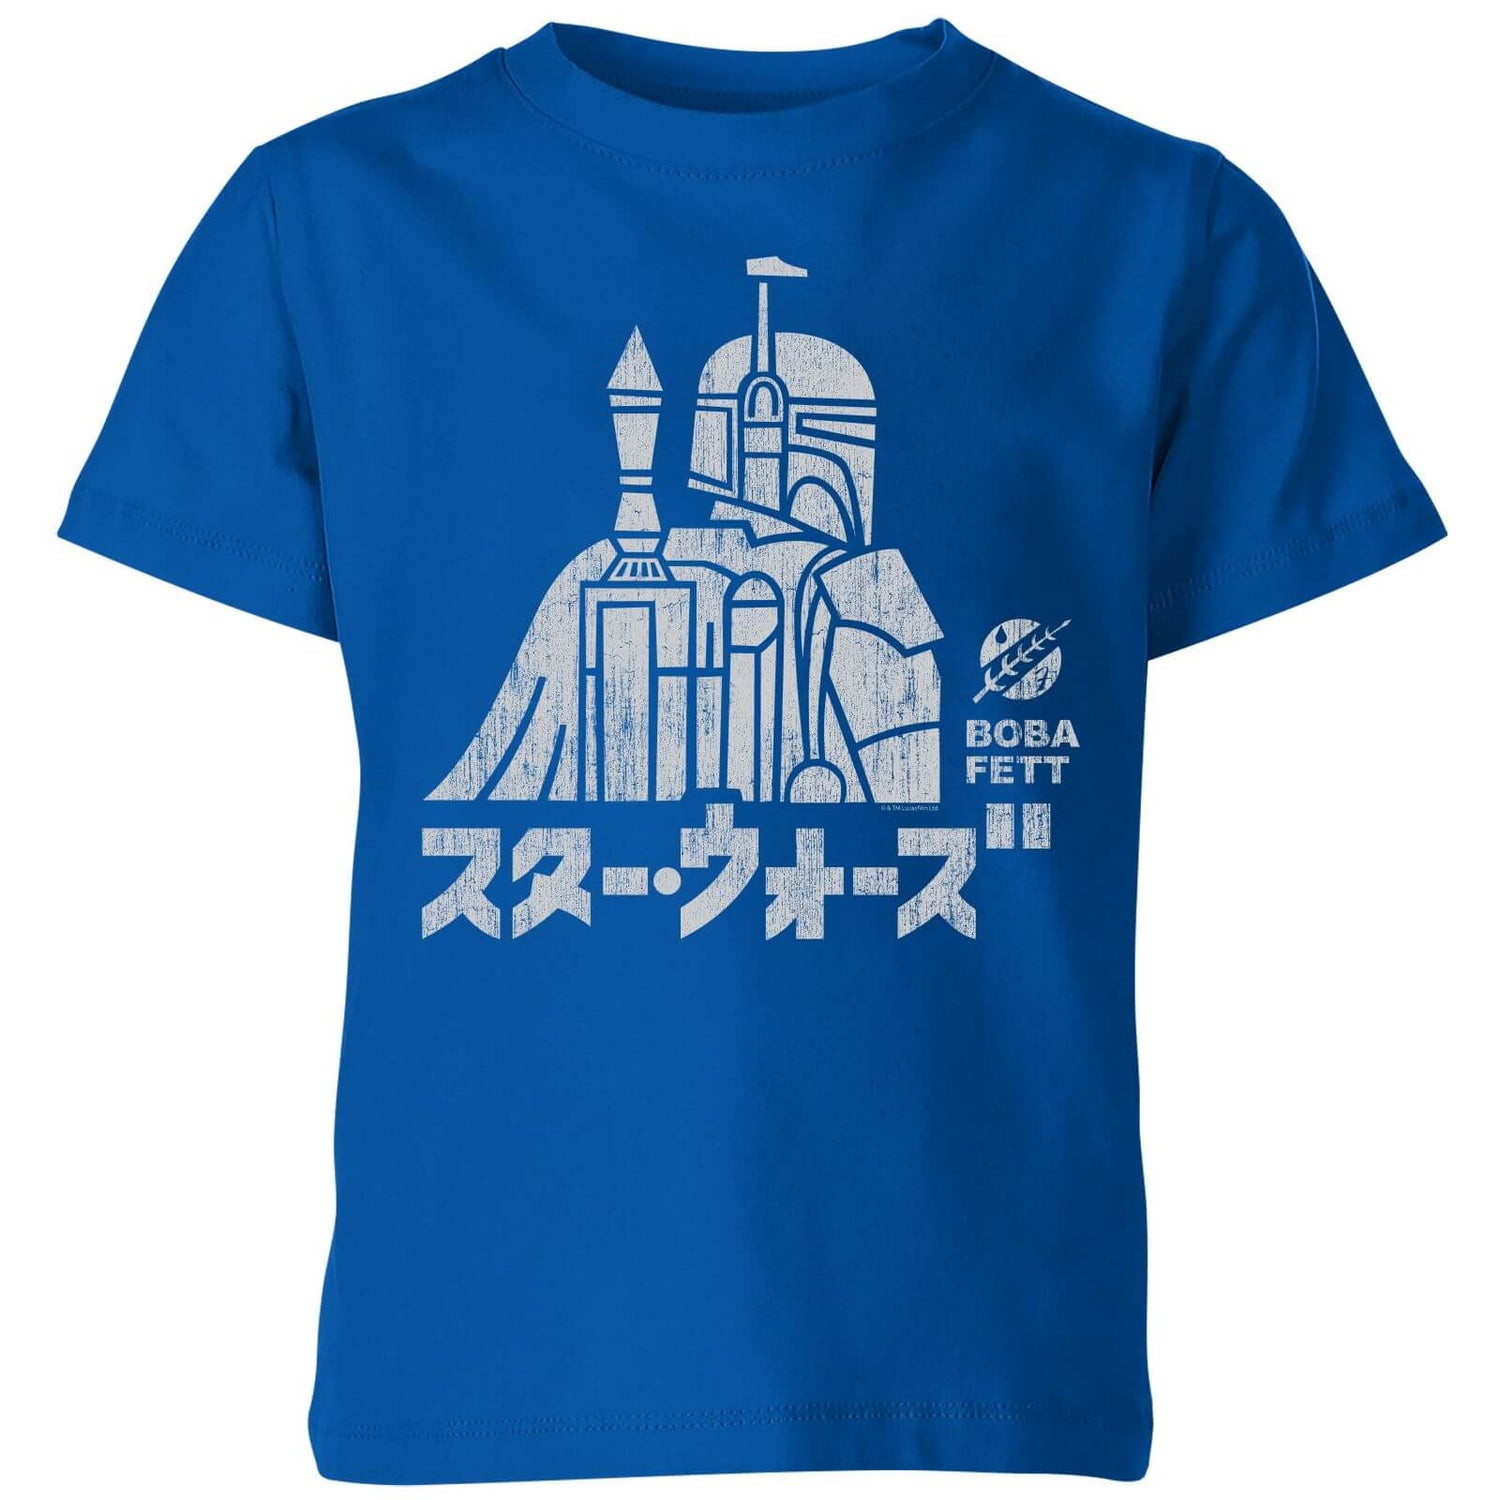 Star Wars Kana Boba Fett Kids' T-Shirt - Blue